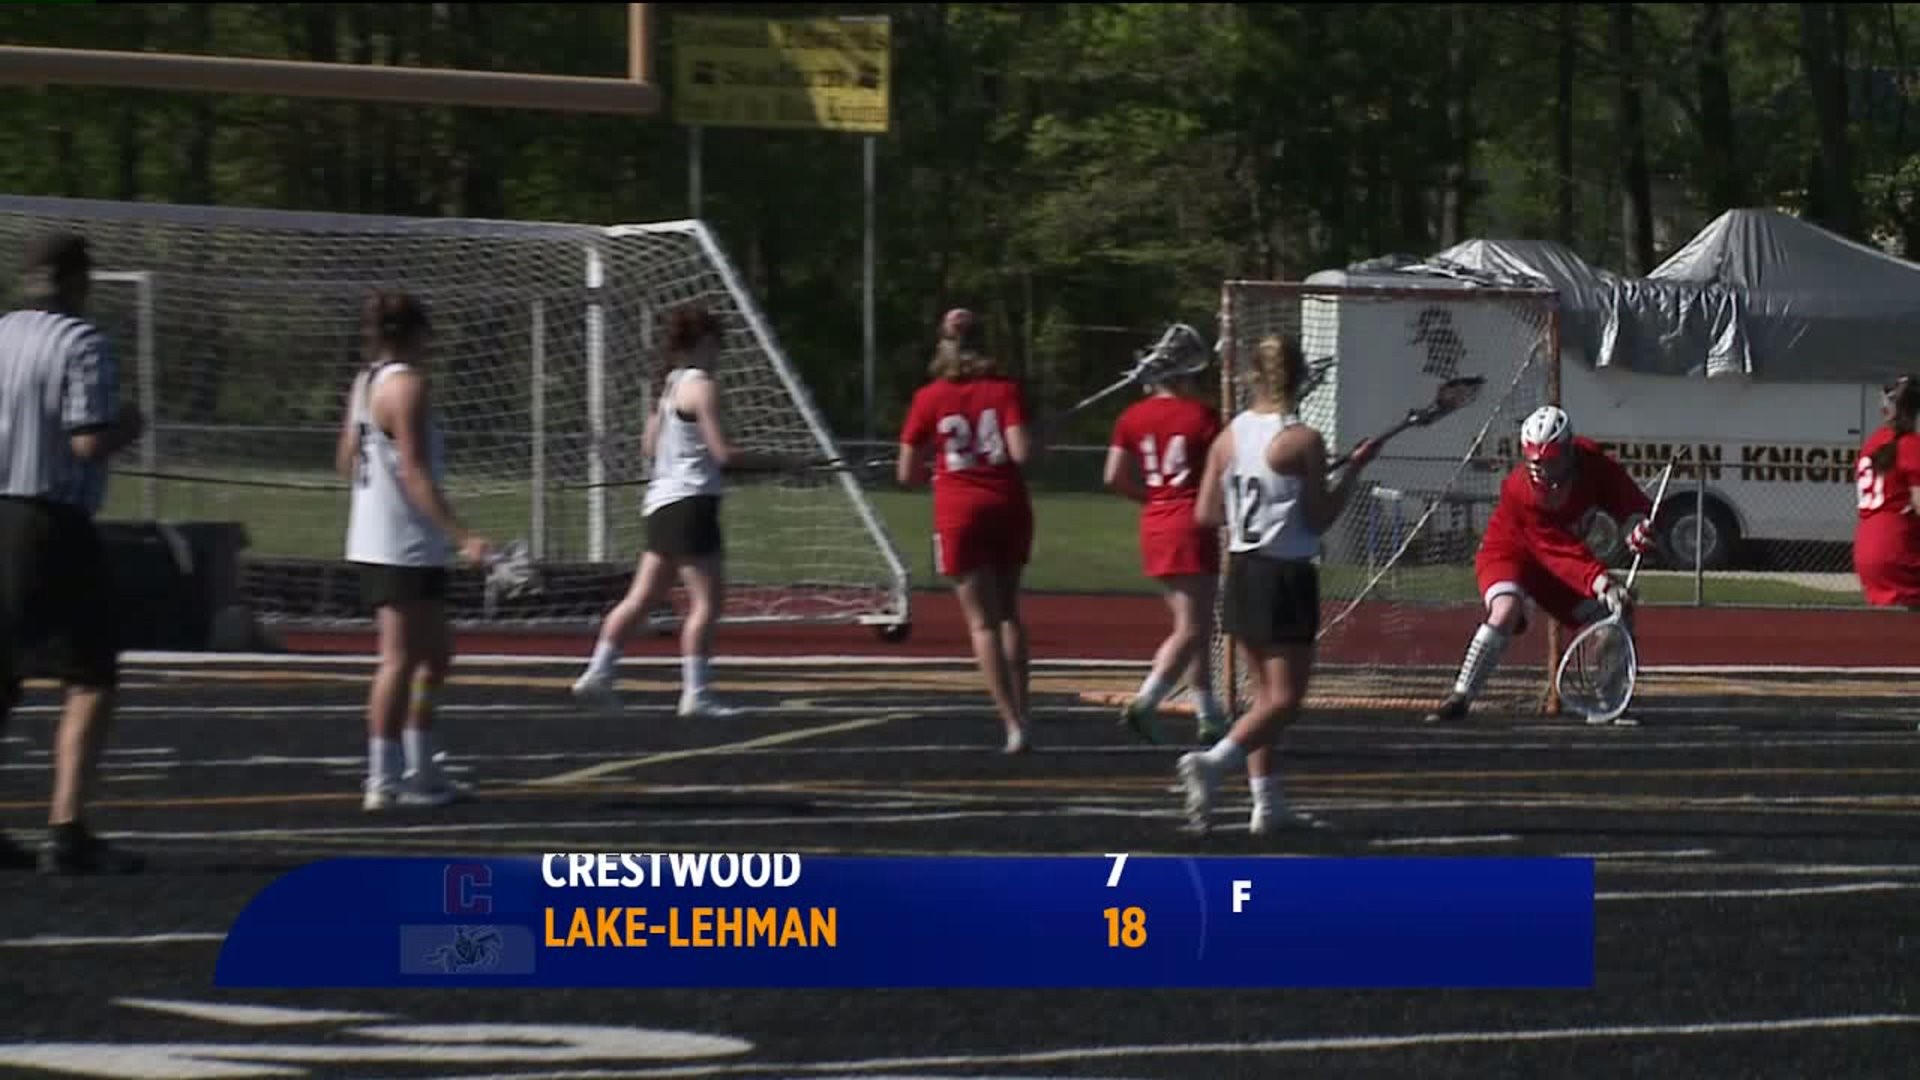 Crestwood vs Lake-Lehman girls lacrosse